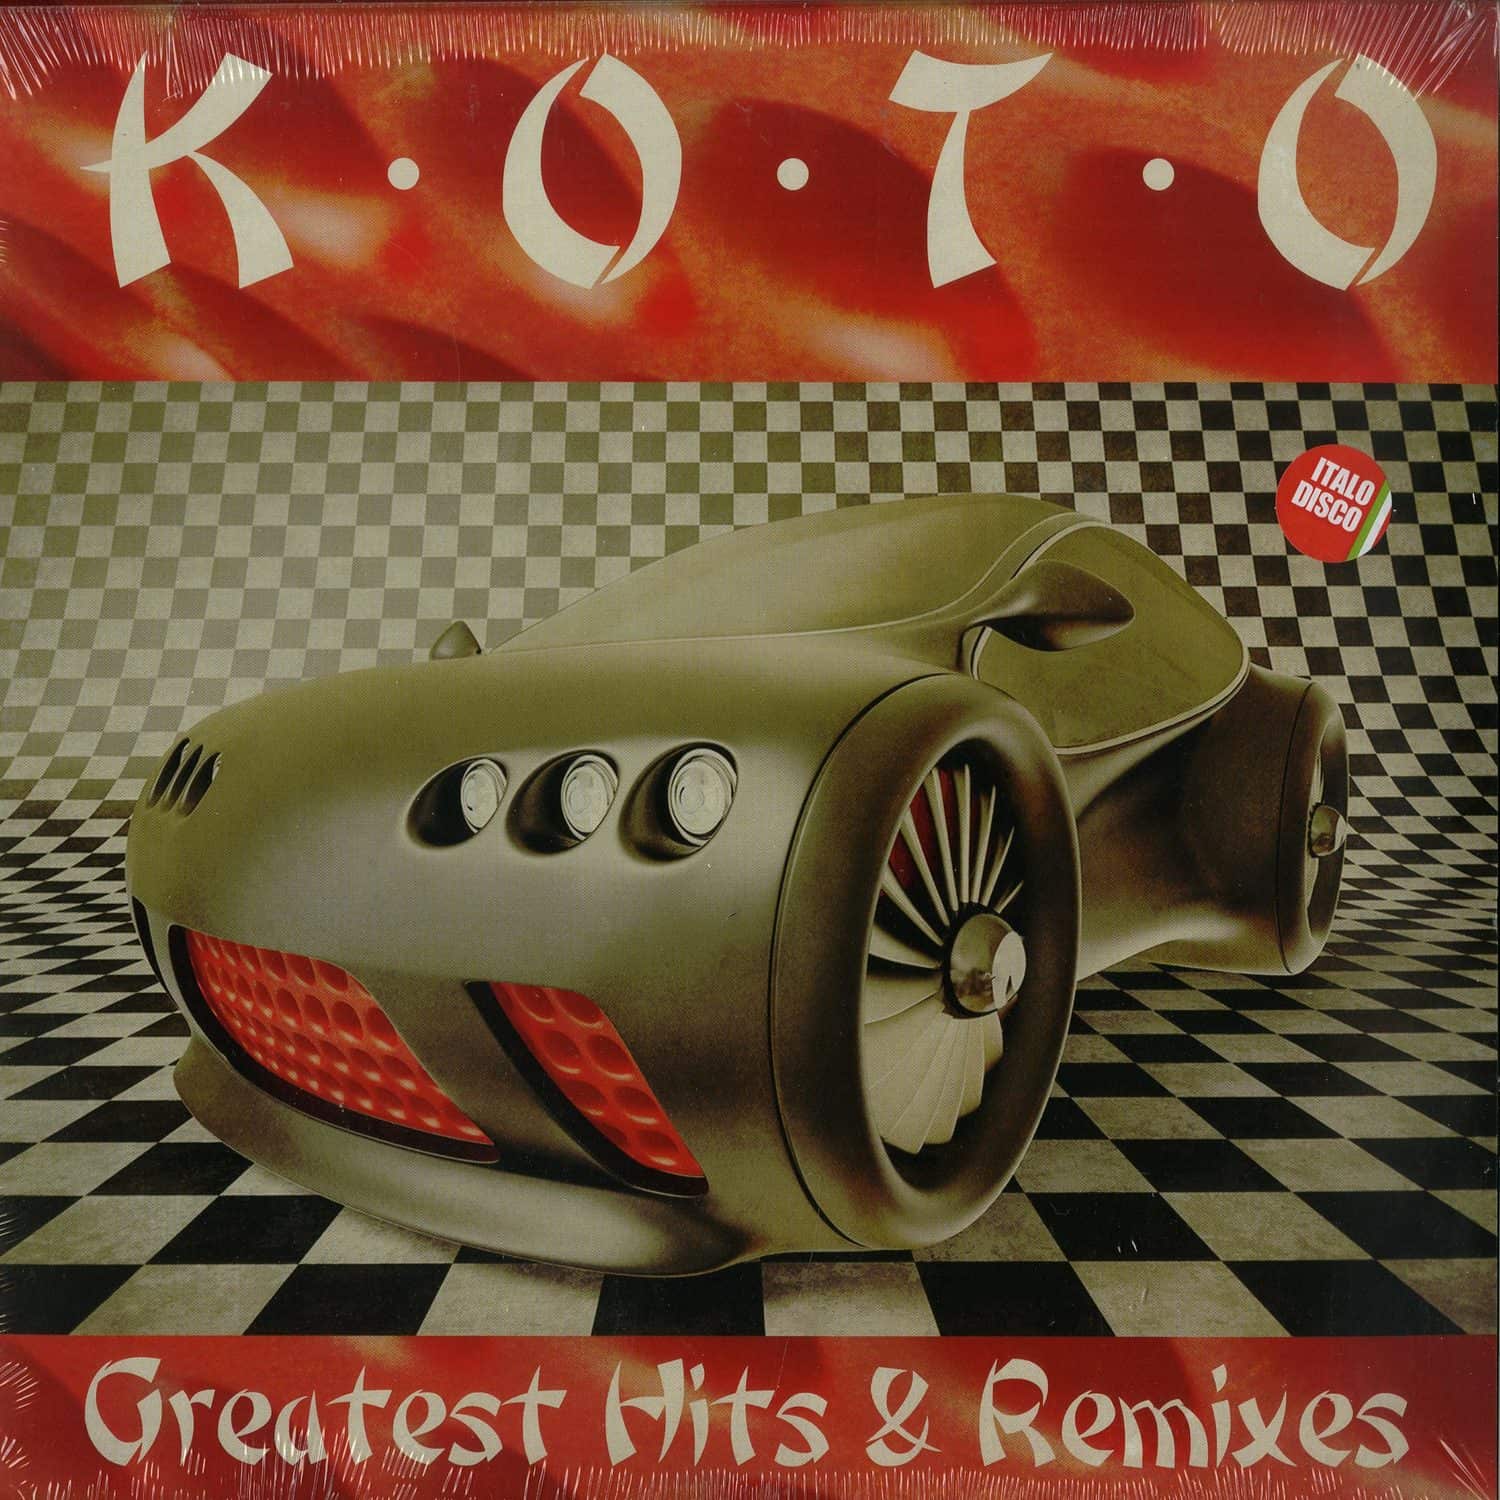 Koto - GREATEST HITS & REMIXES 